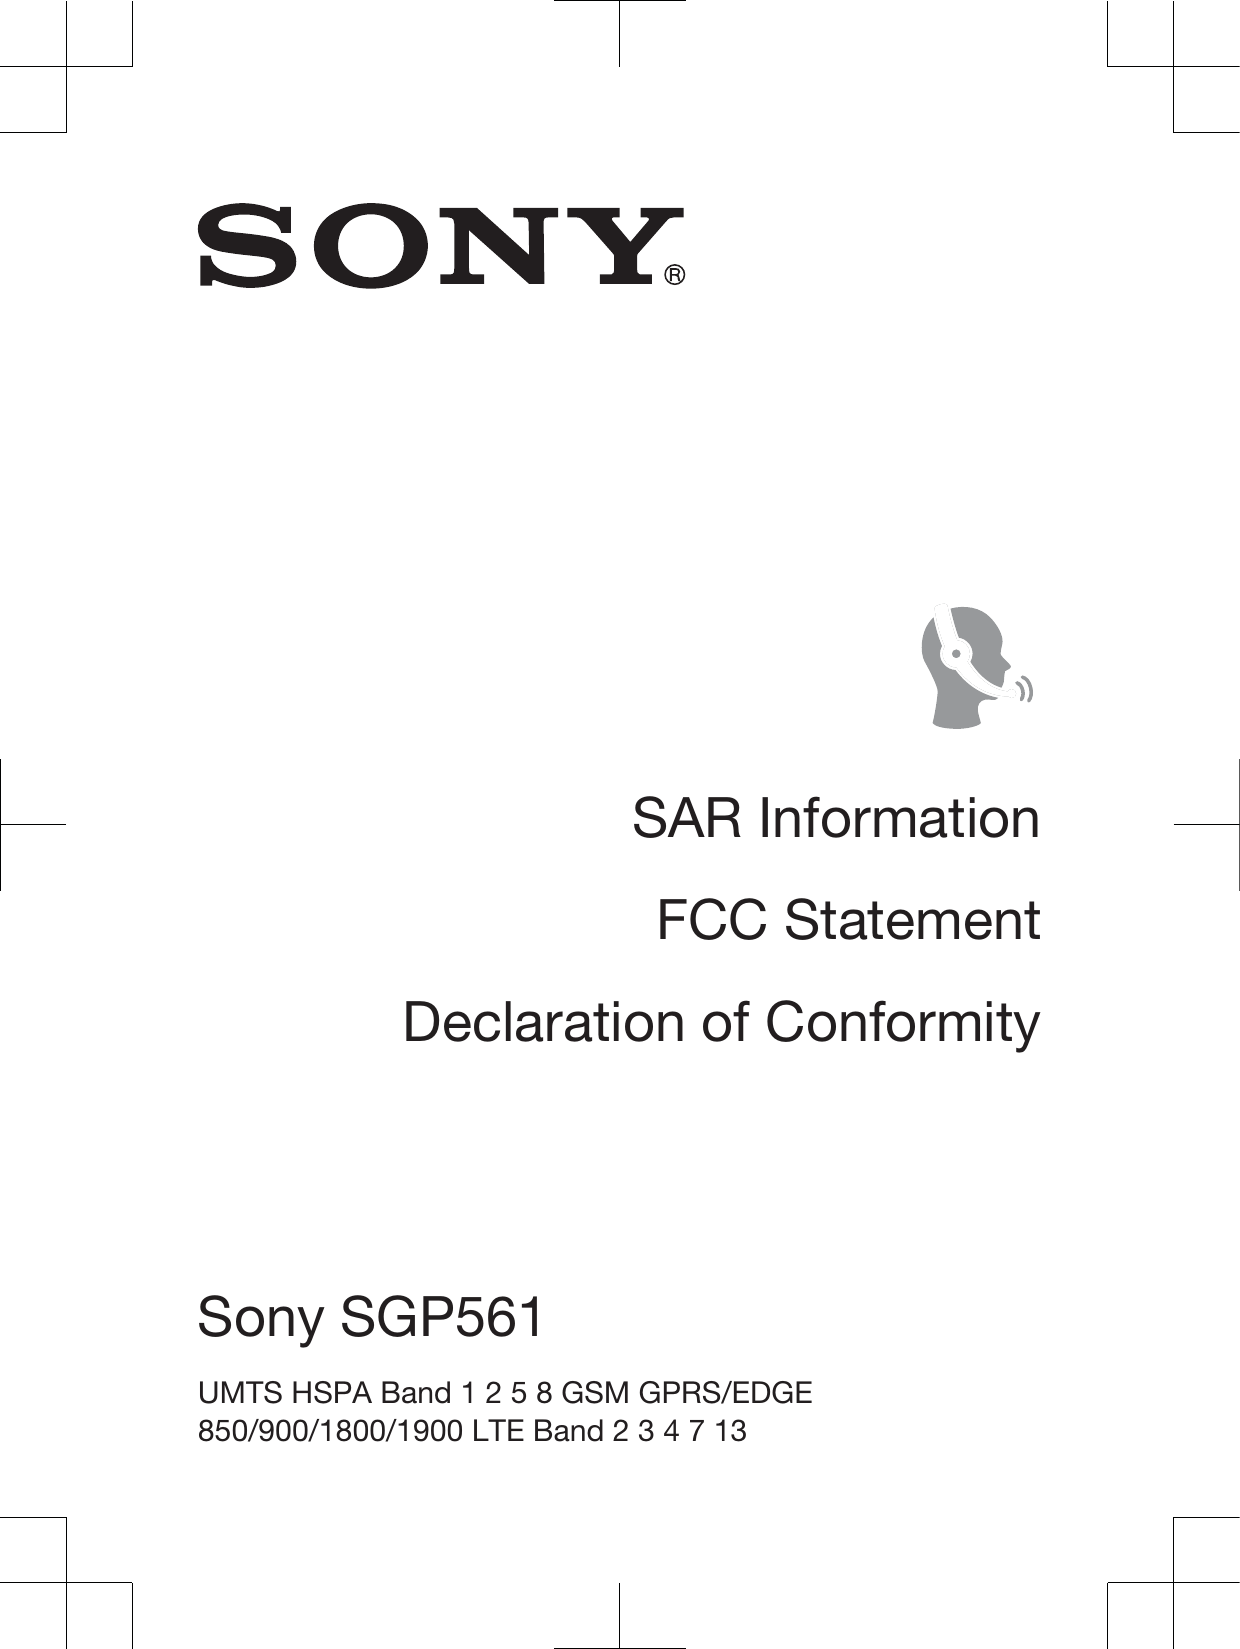 SAR InformationFCC StatementDeclaration of ConformitySony 6*3 UMTS HSPA Band 15 8 GSM GPRS/EDGE850/900/1800/1900 LTE Band 